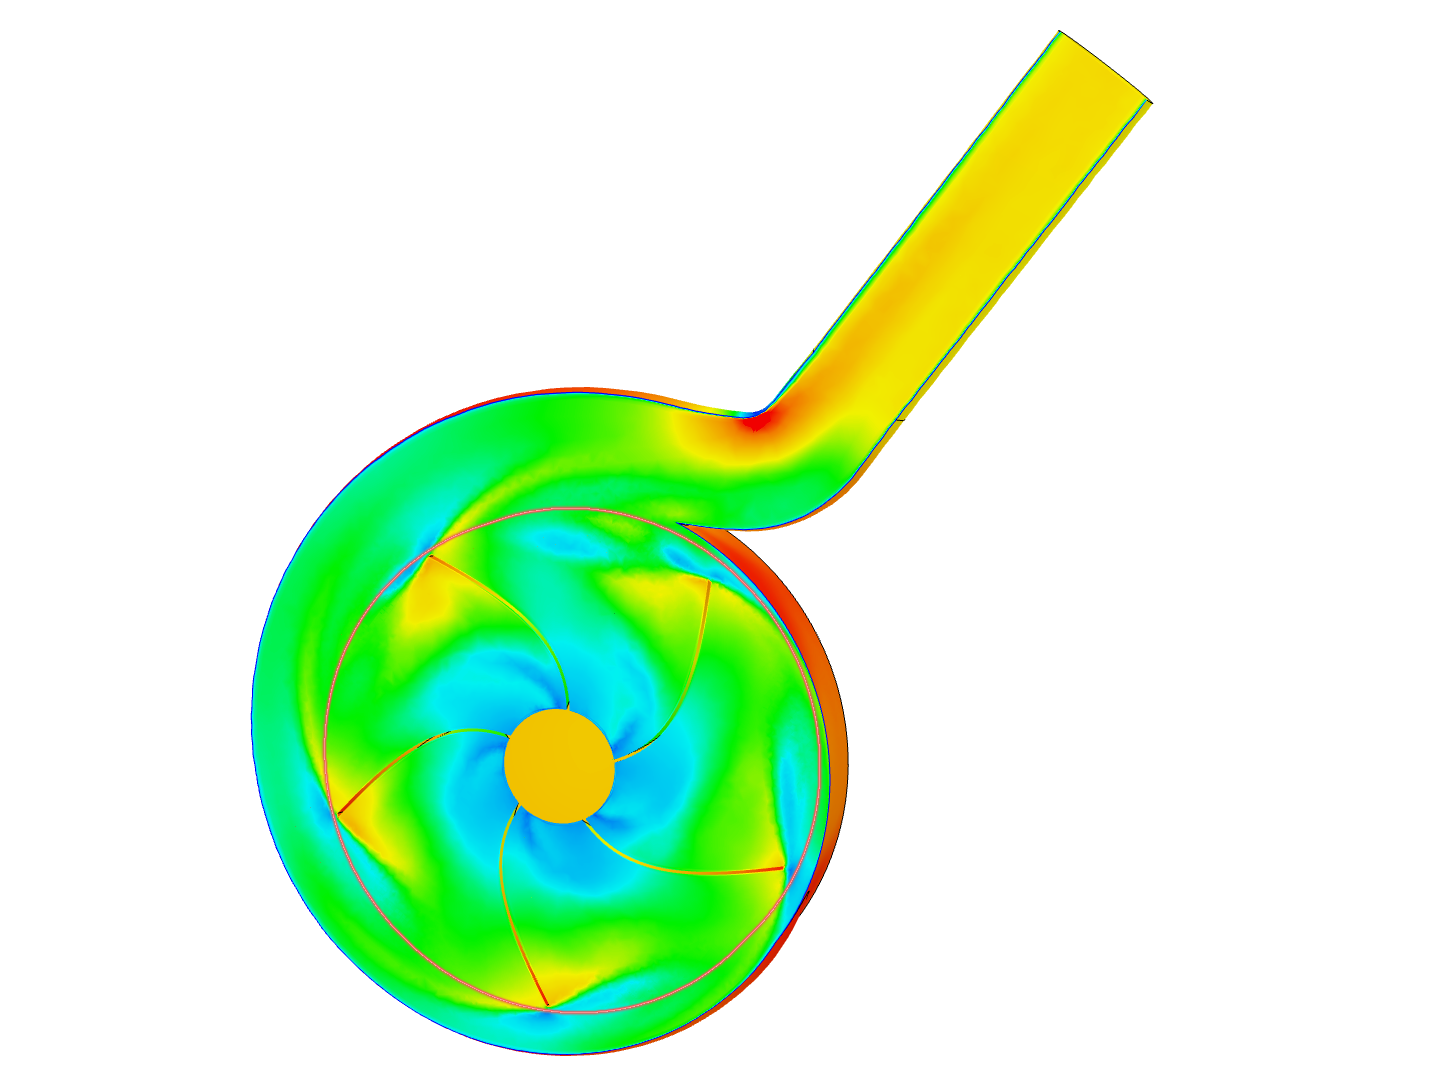 centerfugal pump image